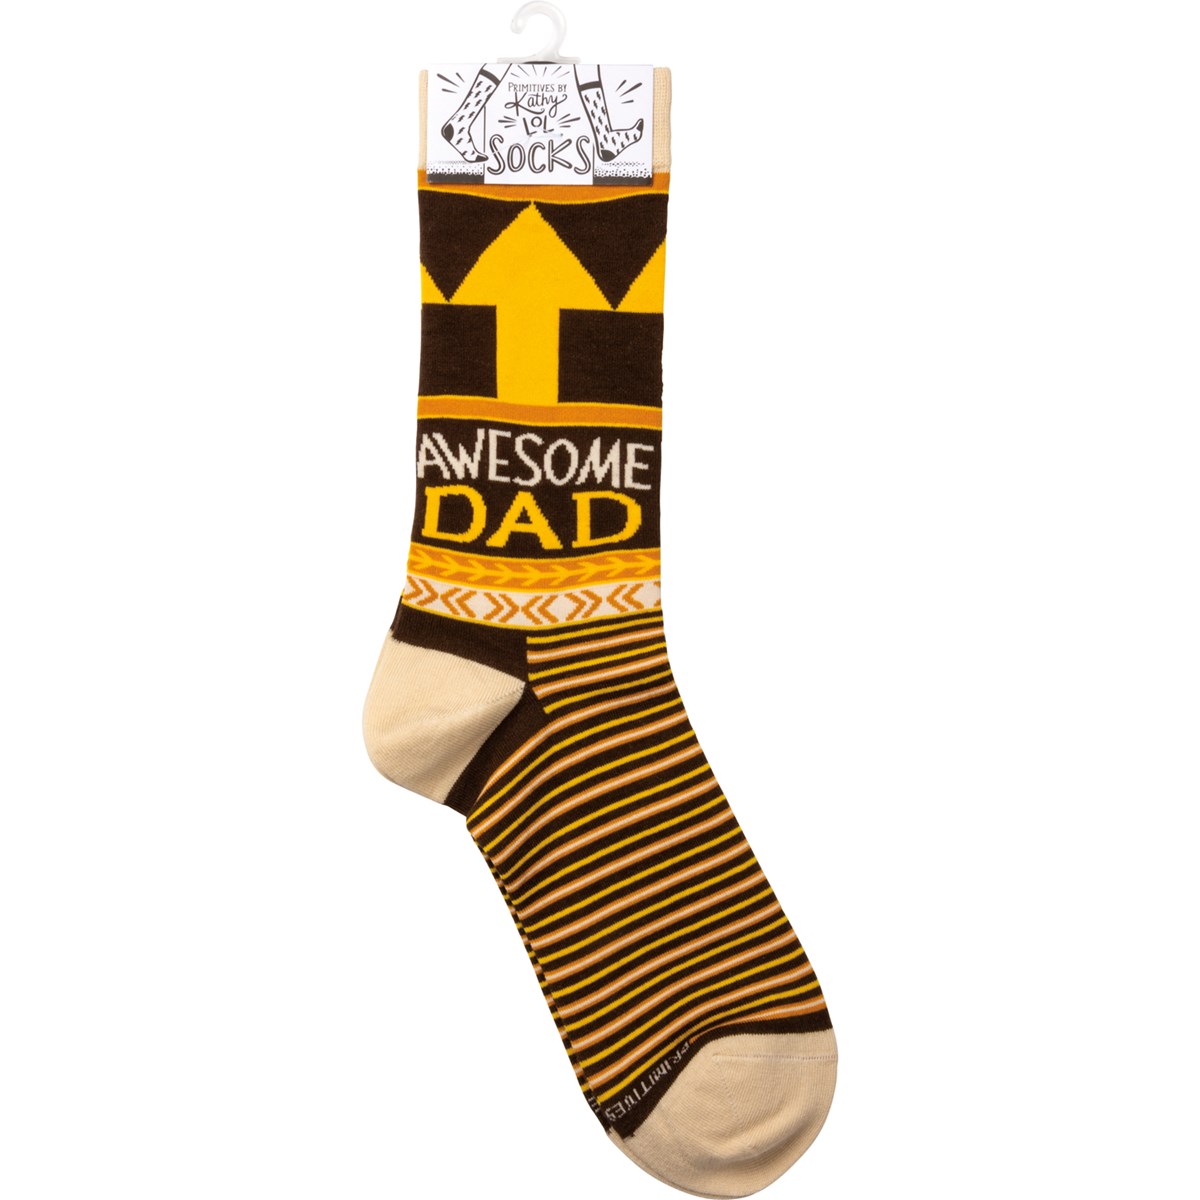 Awesome Dad Socks - Cotton, Nylon, Spandex